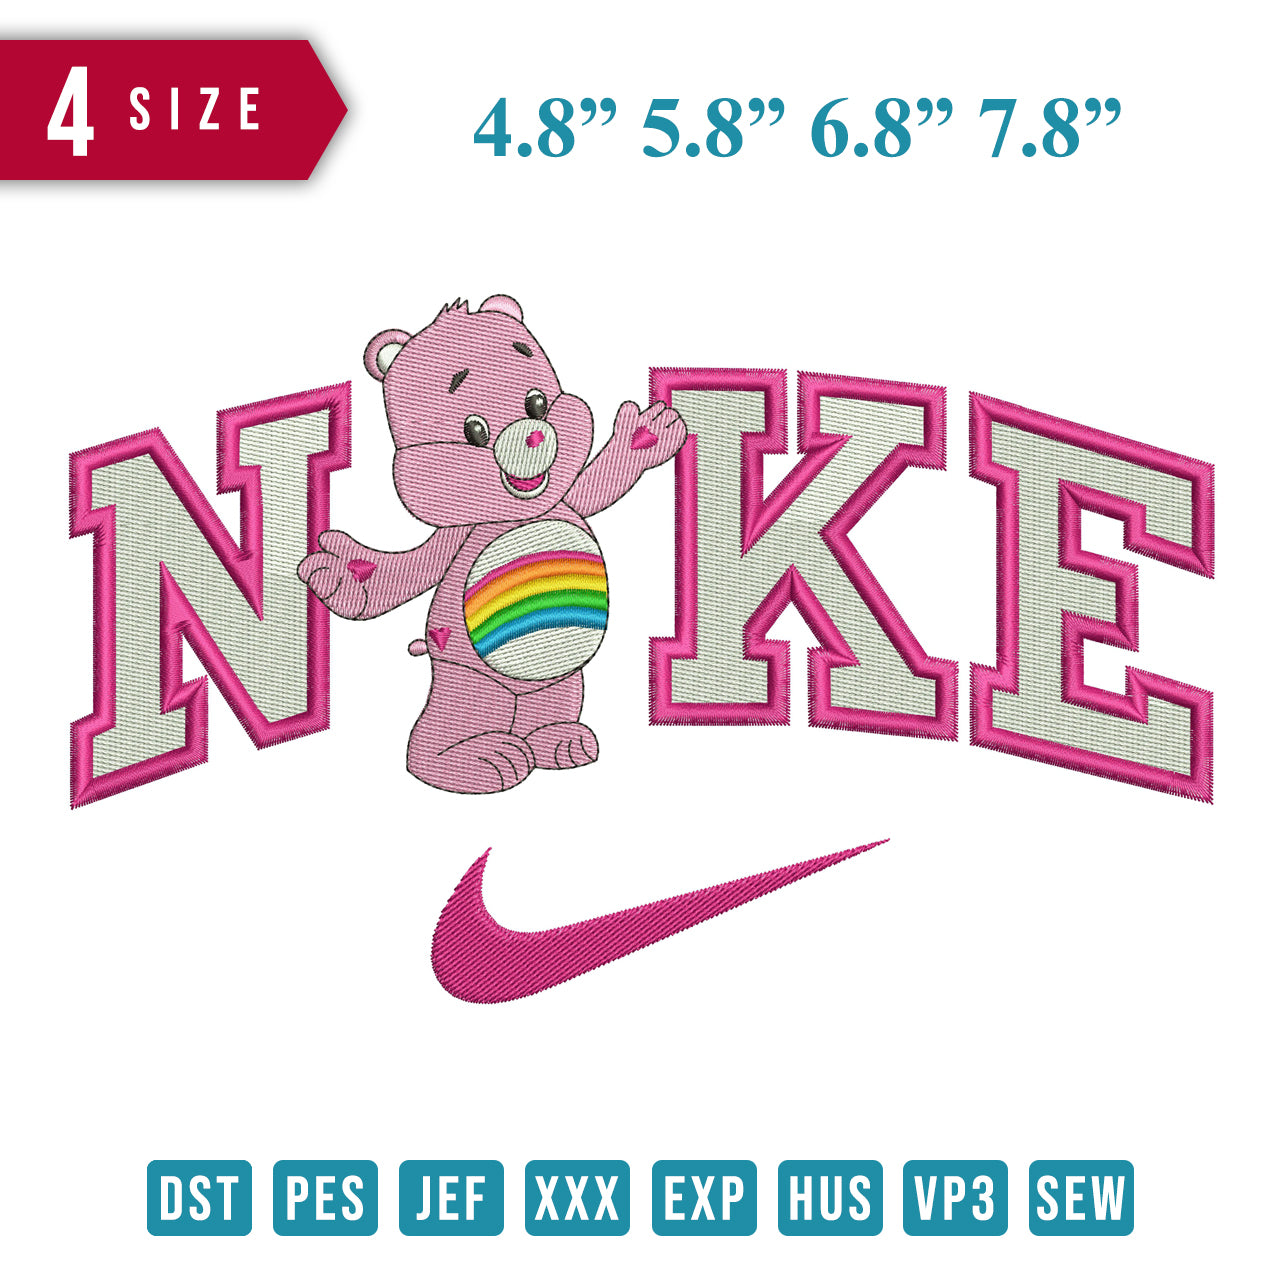 Nike Care Bear